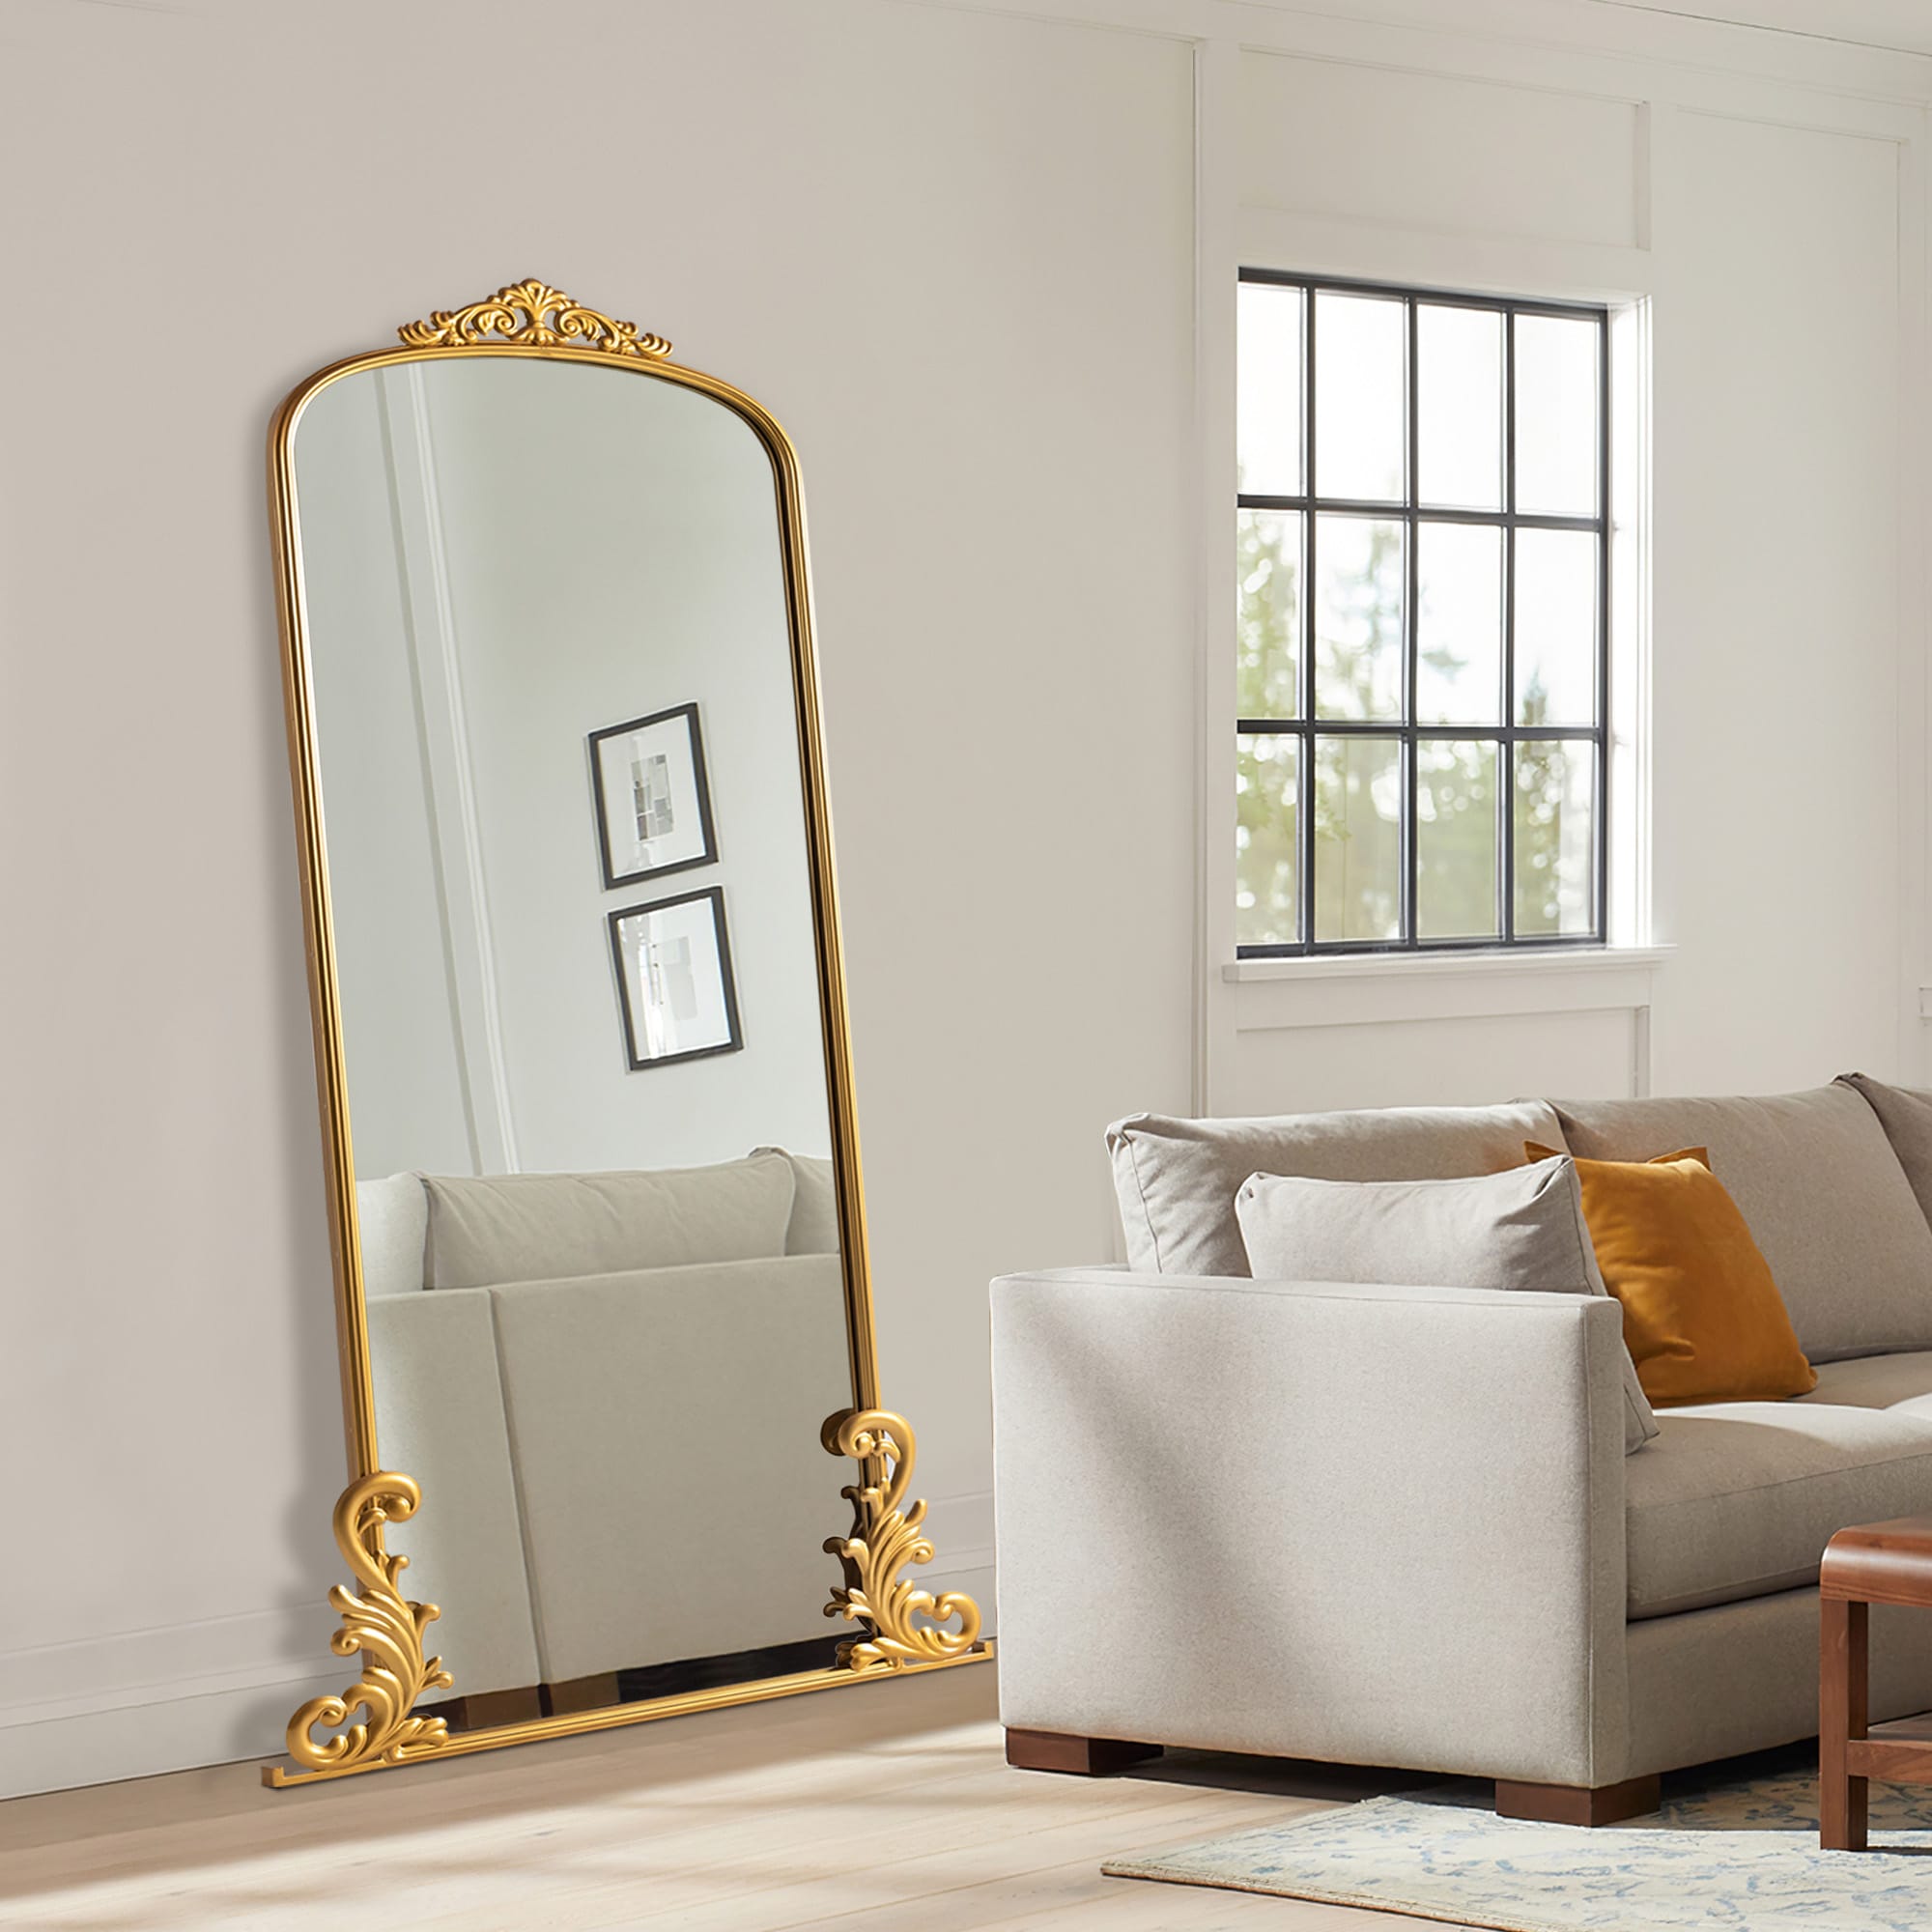 NeuType 29-in W x 68-in H Arch Gold Framed Full Length Floor Mirror